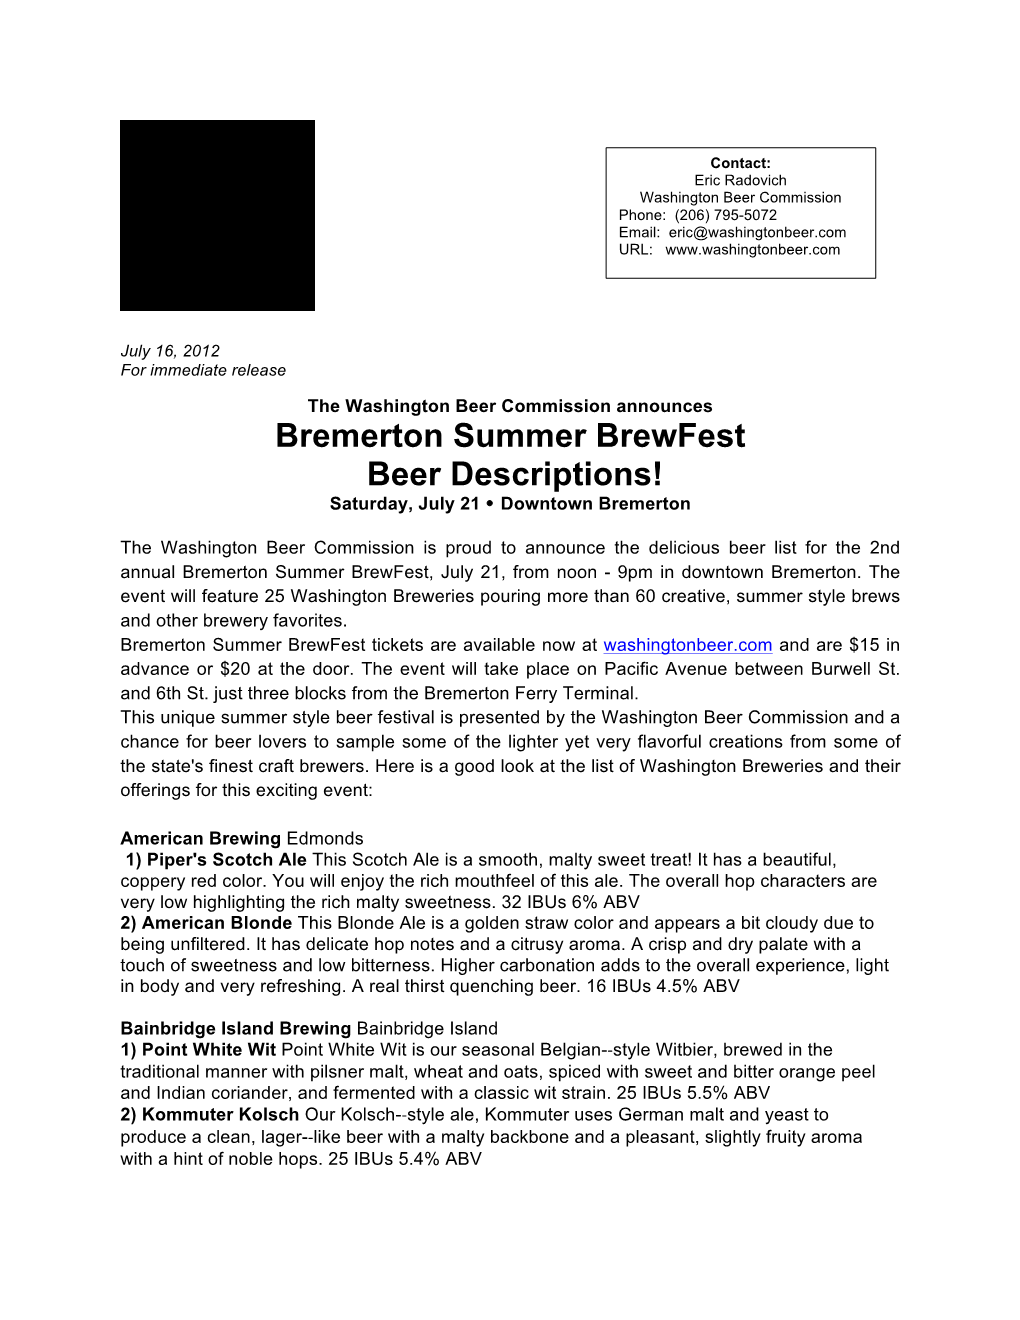 Bremerton Summer Brewfest Beer Descriptions! Saturday, July 21  Downtown Bremerton